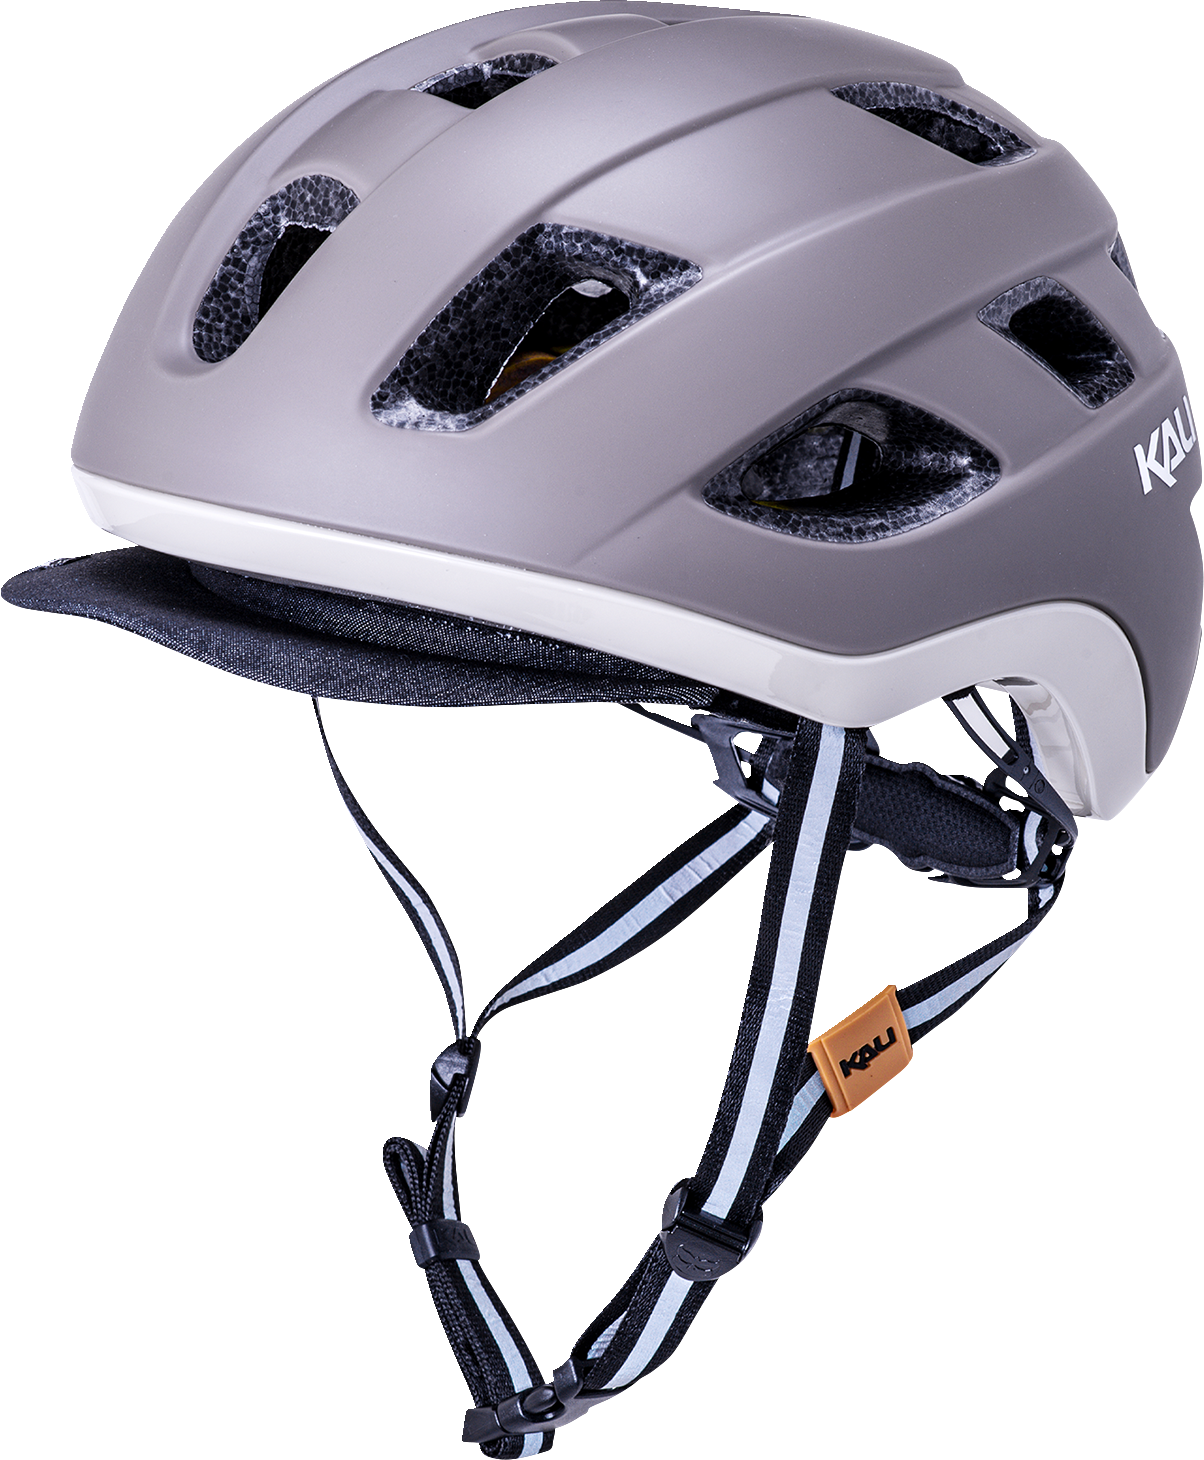 KALI Traffic 2.0 Helmet - Matte Stone - S/M 0250922126